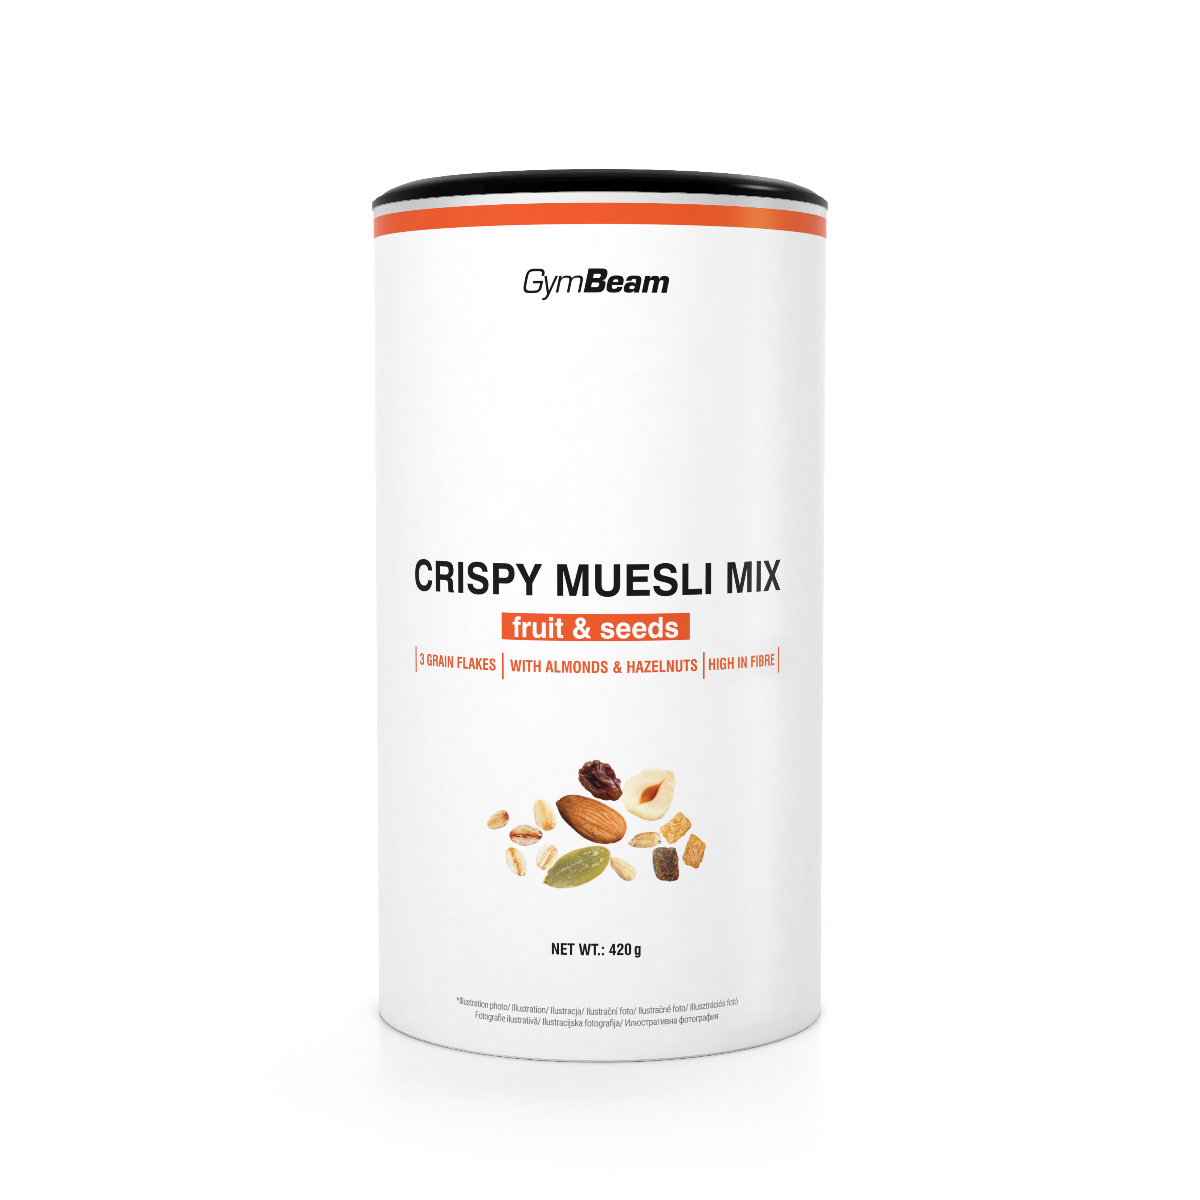 E-shop Crispy Muesli Mix - GymBeam, ovocie a semienka, 420g